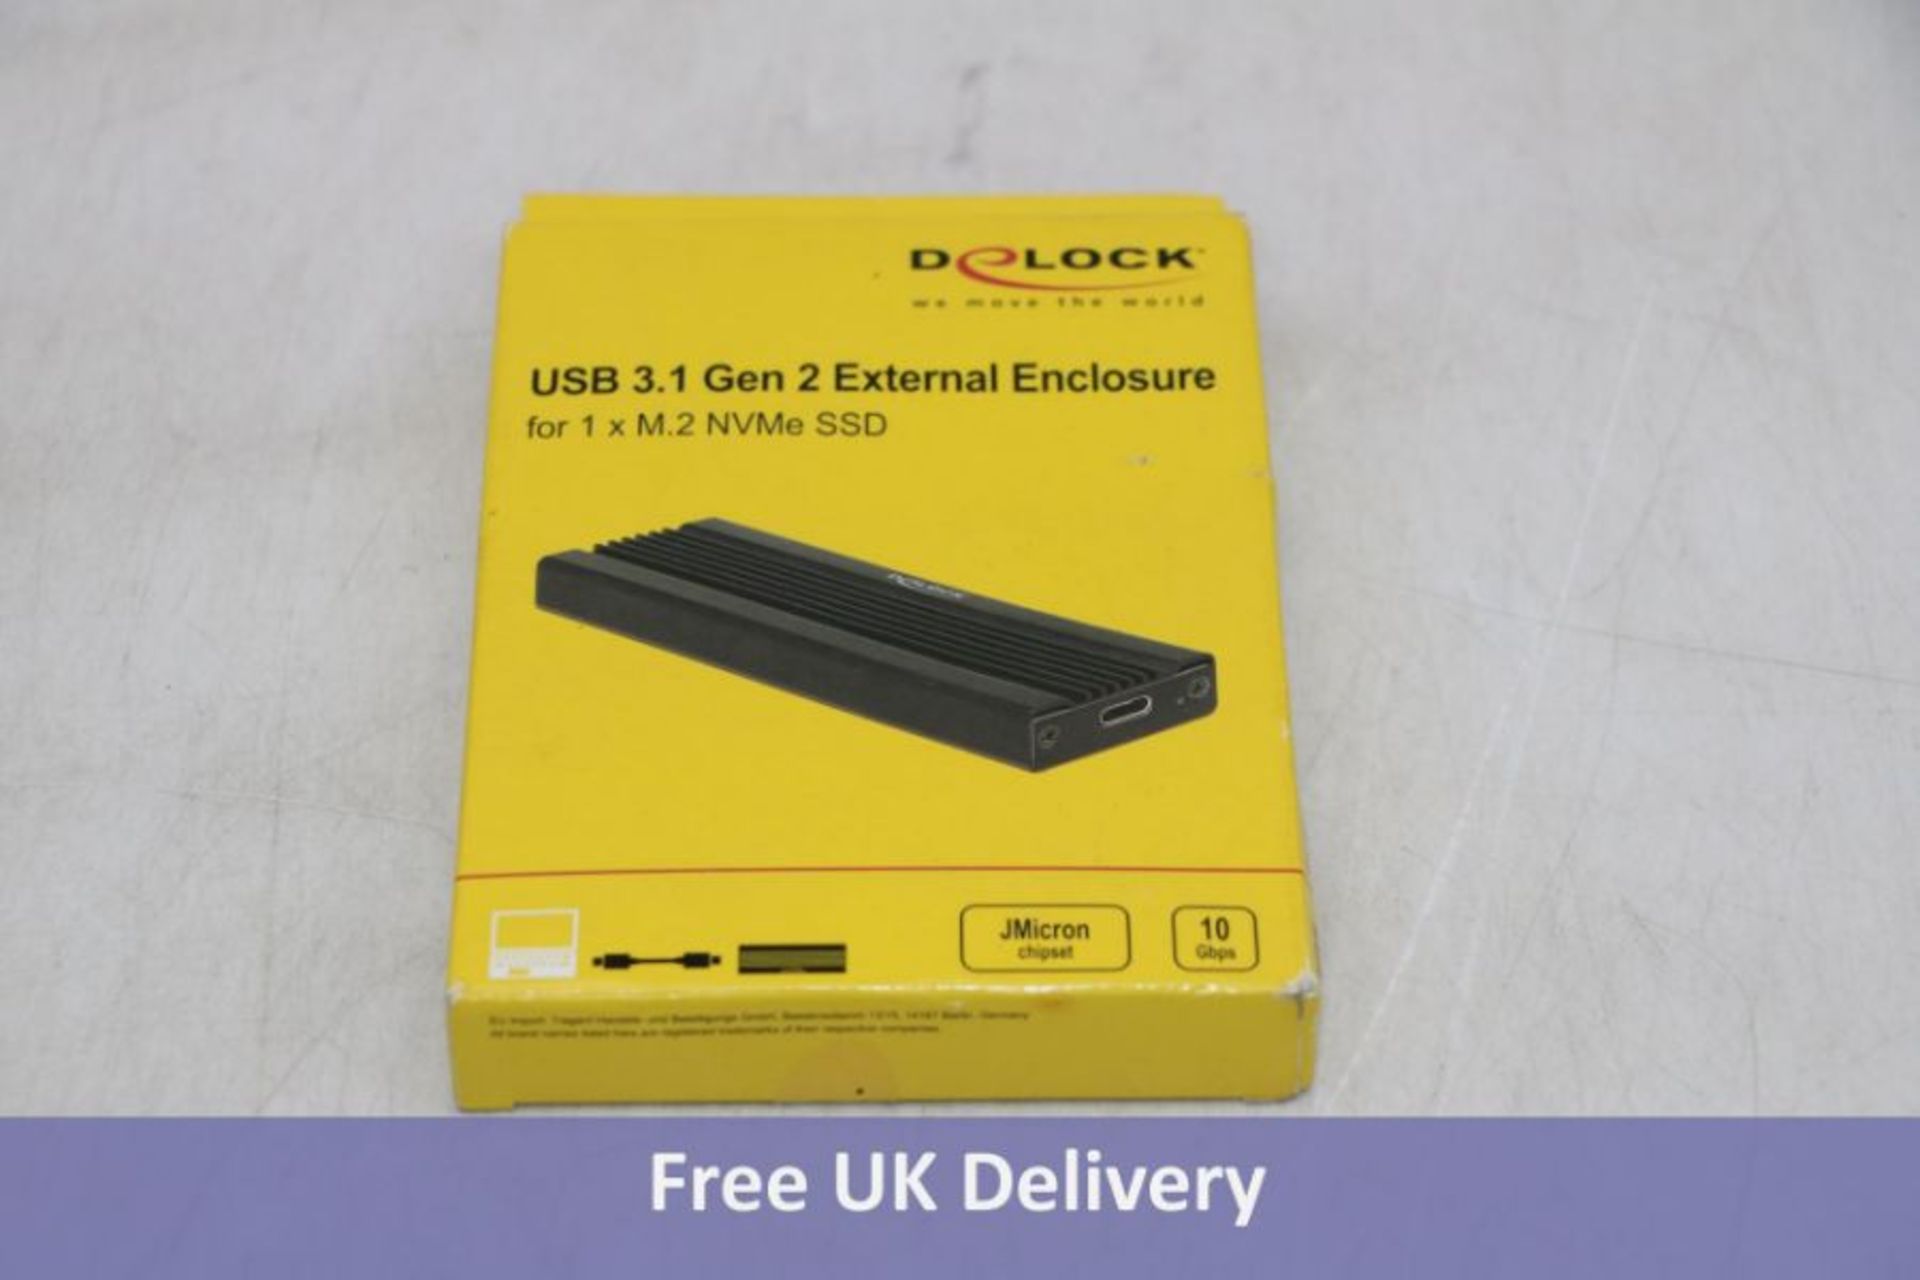 Delock USB 3.1 Gen 2 External Enclosure For 1 x M.2 NVMe SSD, JMicron Chipset, 10 Gbps